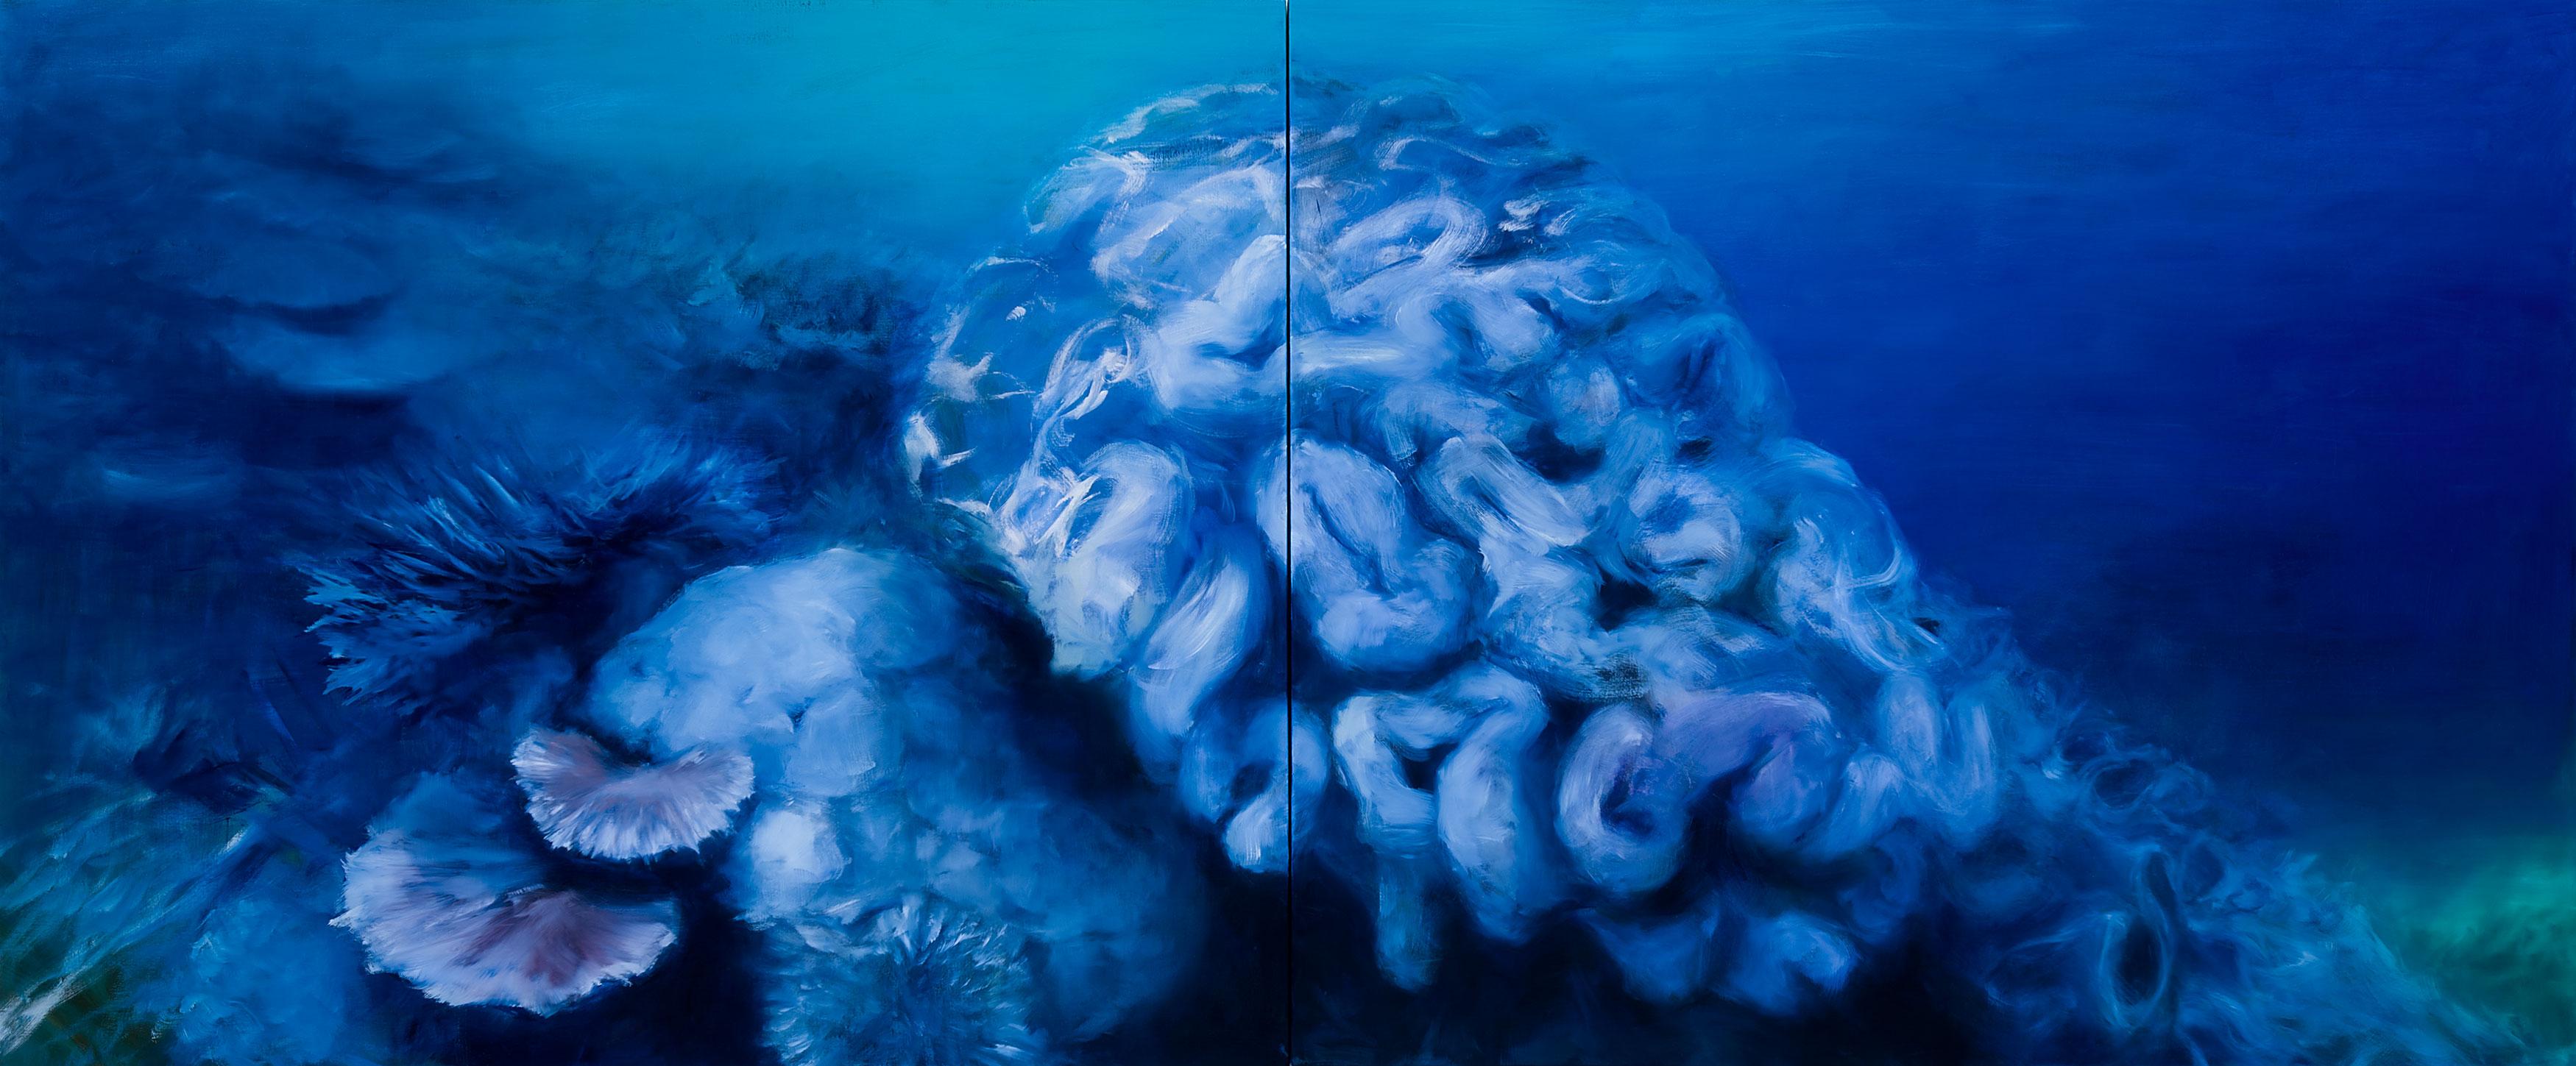 "Arrecife menguante" Corales, Pintura al óleo de paisaje marino contemporáneo a gran escala (azul intenso)